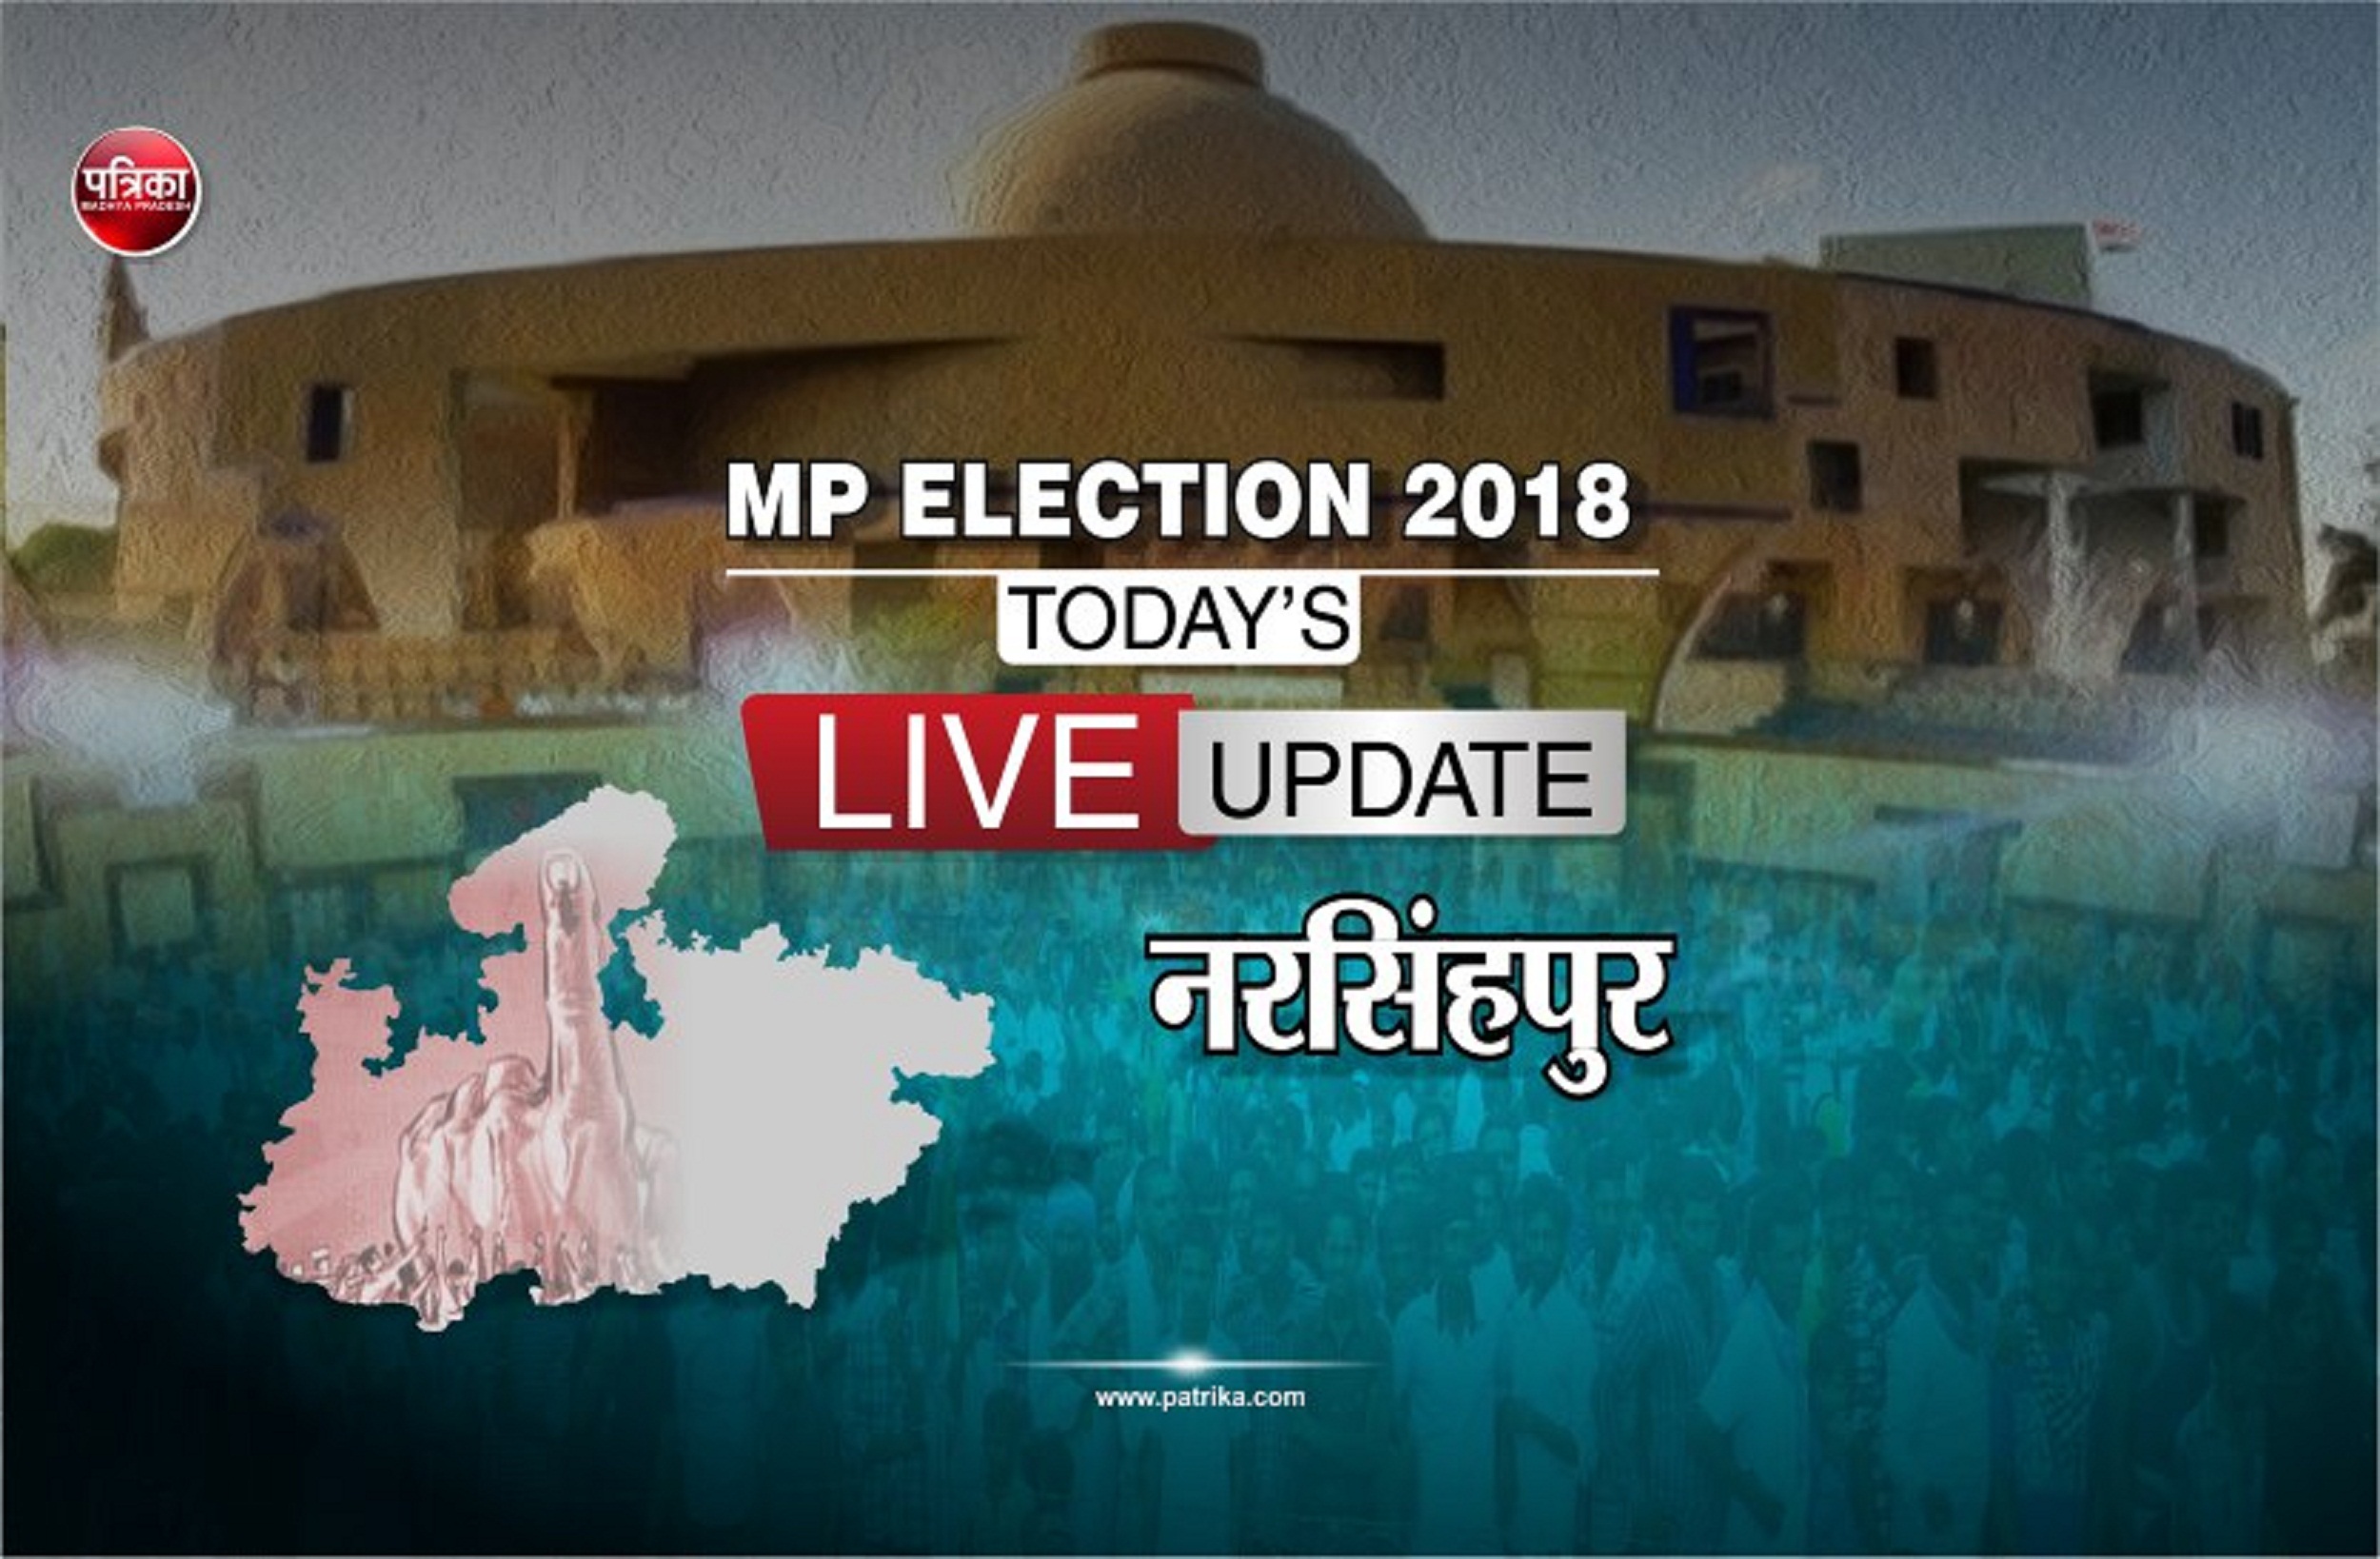 Latest update for voting in Narsinghpur: 2 polling till now